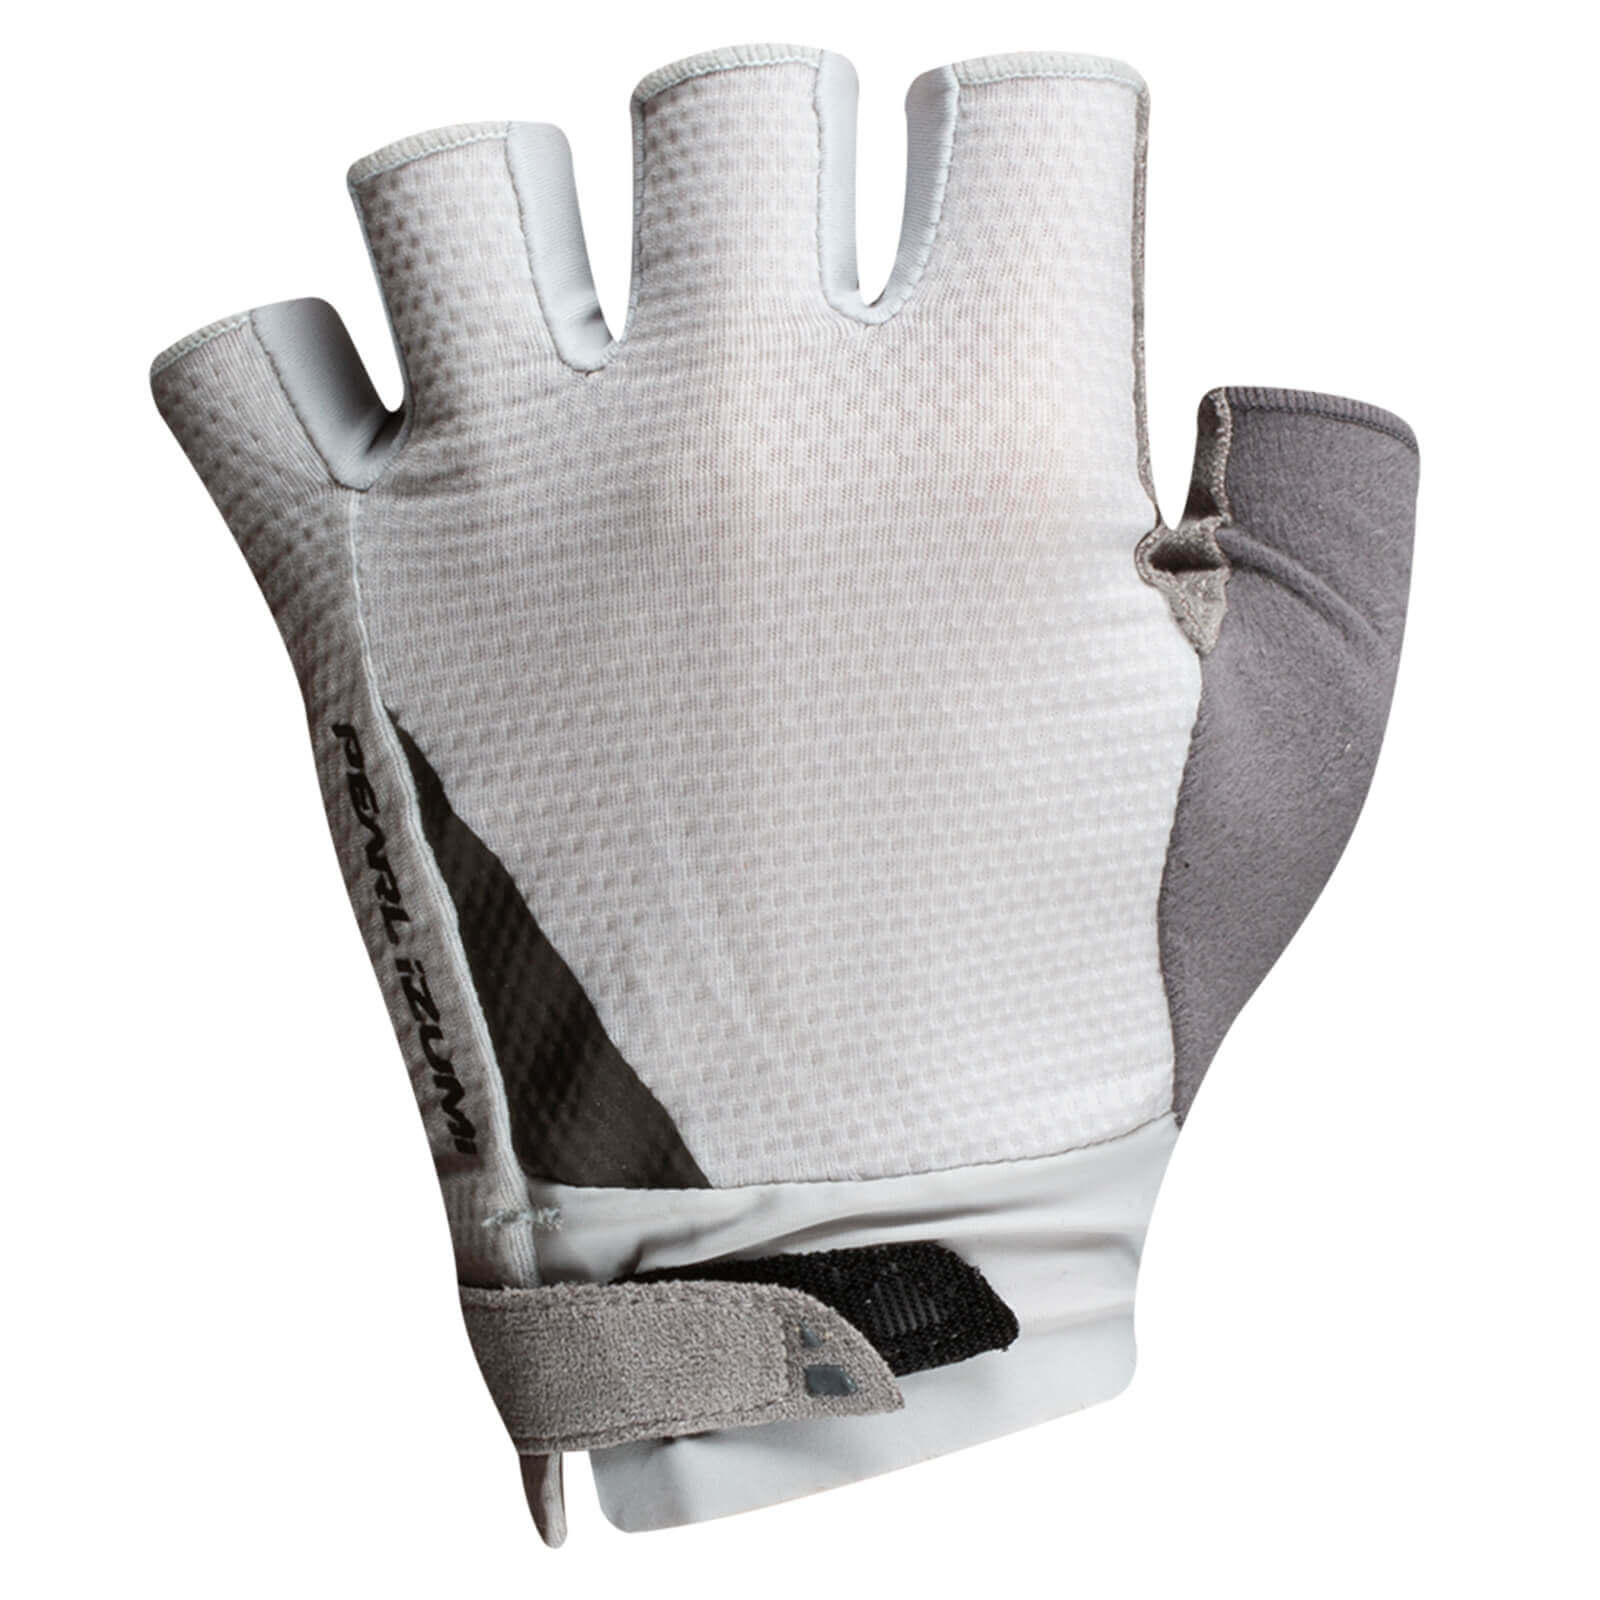 Pearl Izumi Elite Gel Gloves - XL - Fog